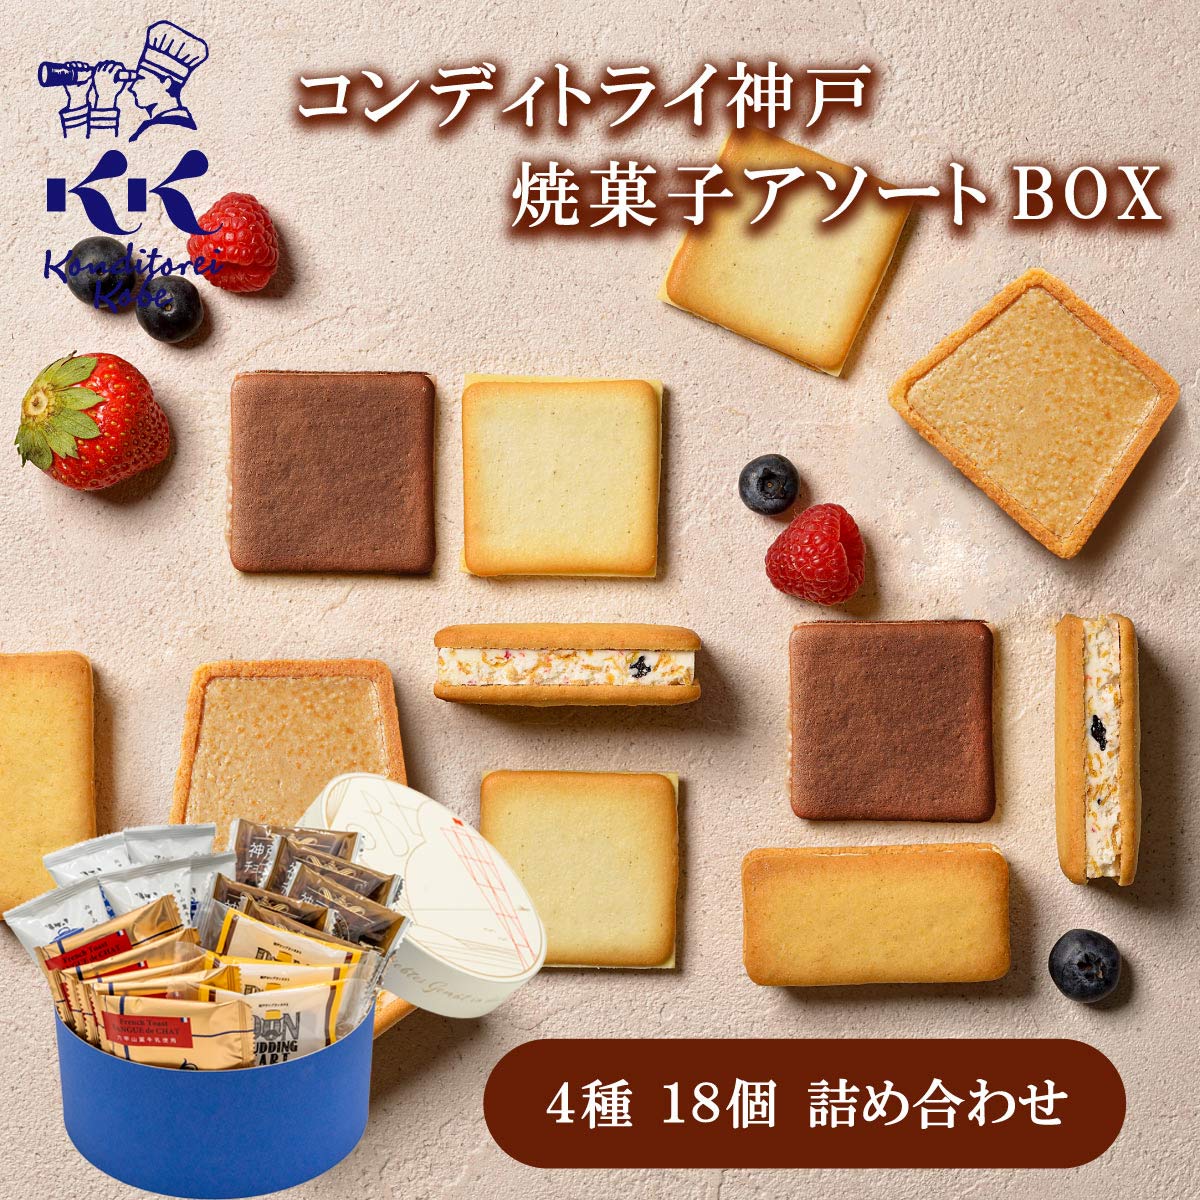 japanese dessert assortment, japanese dessert box, japanese snack box, konditorei kobe, japanese sweets box, konditorei kobe baked sweets box